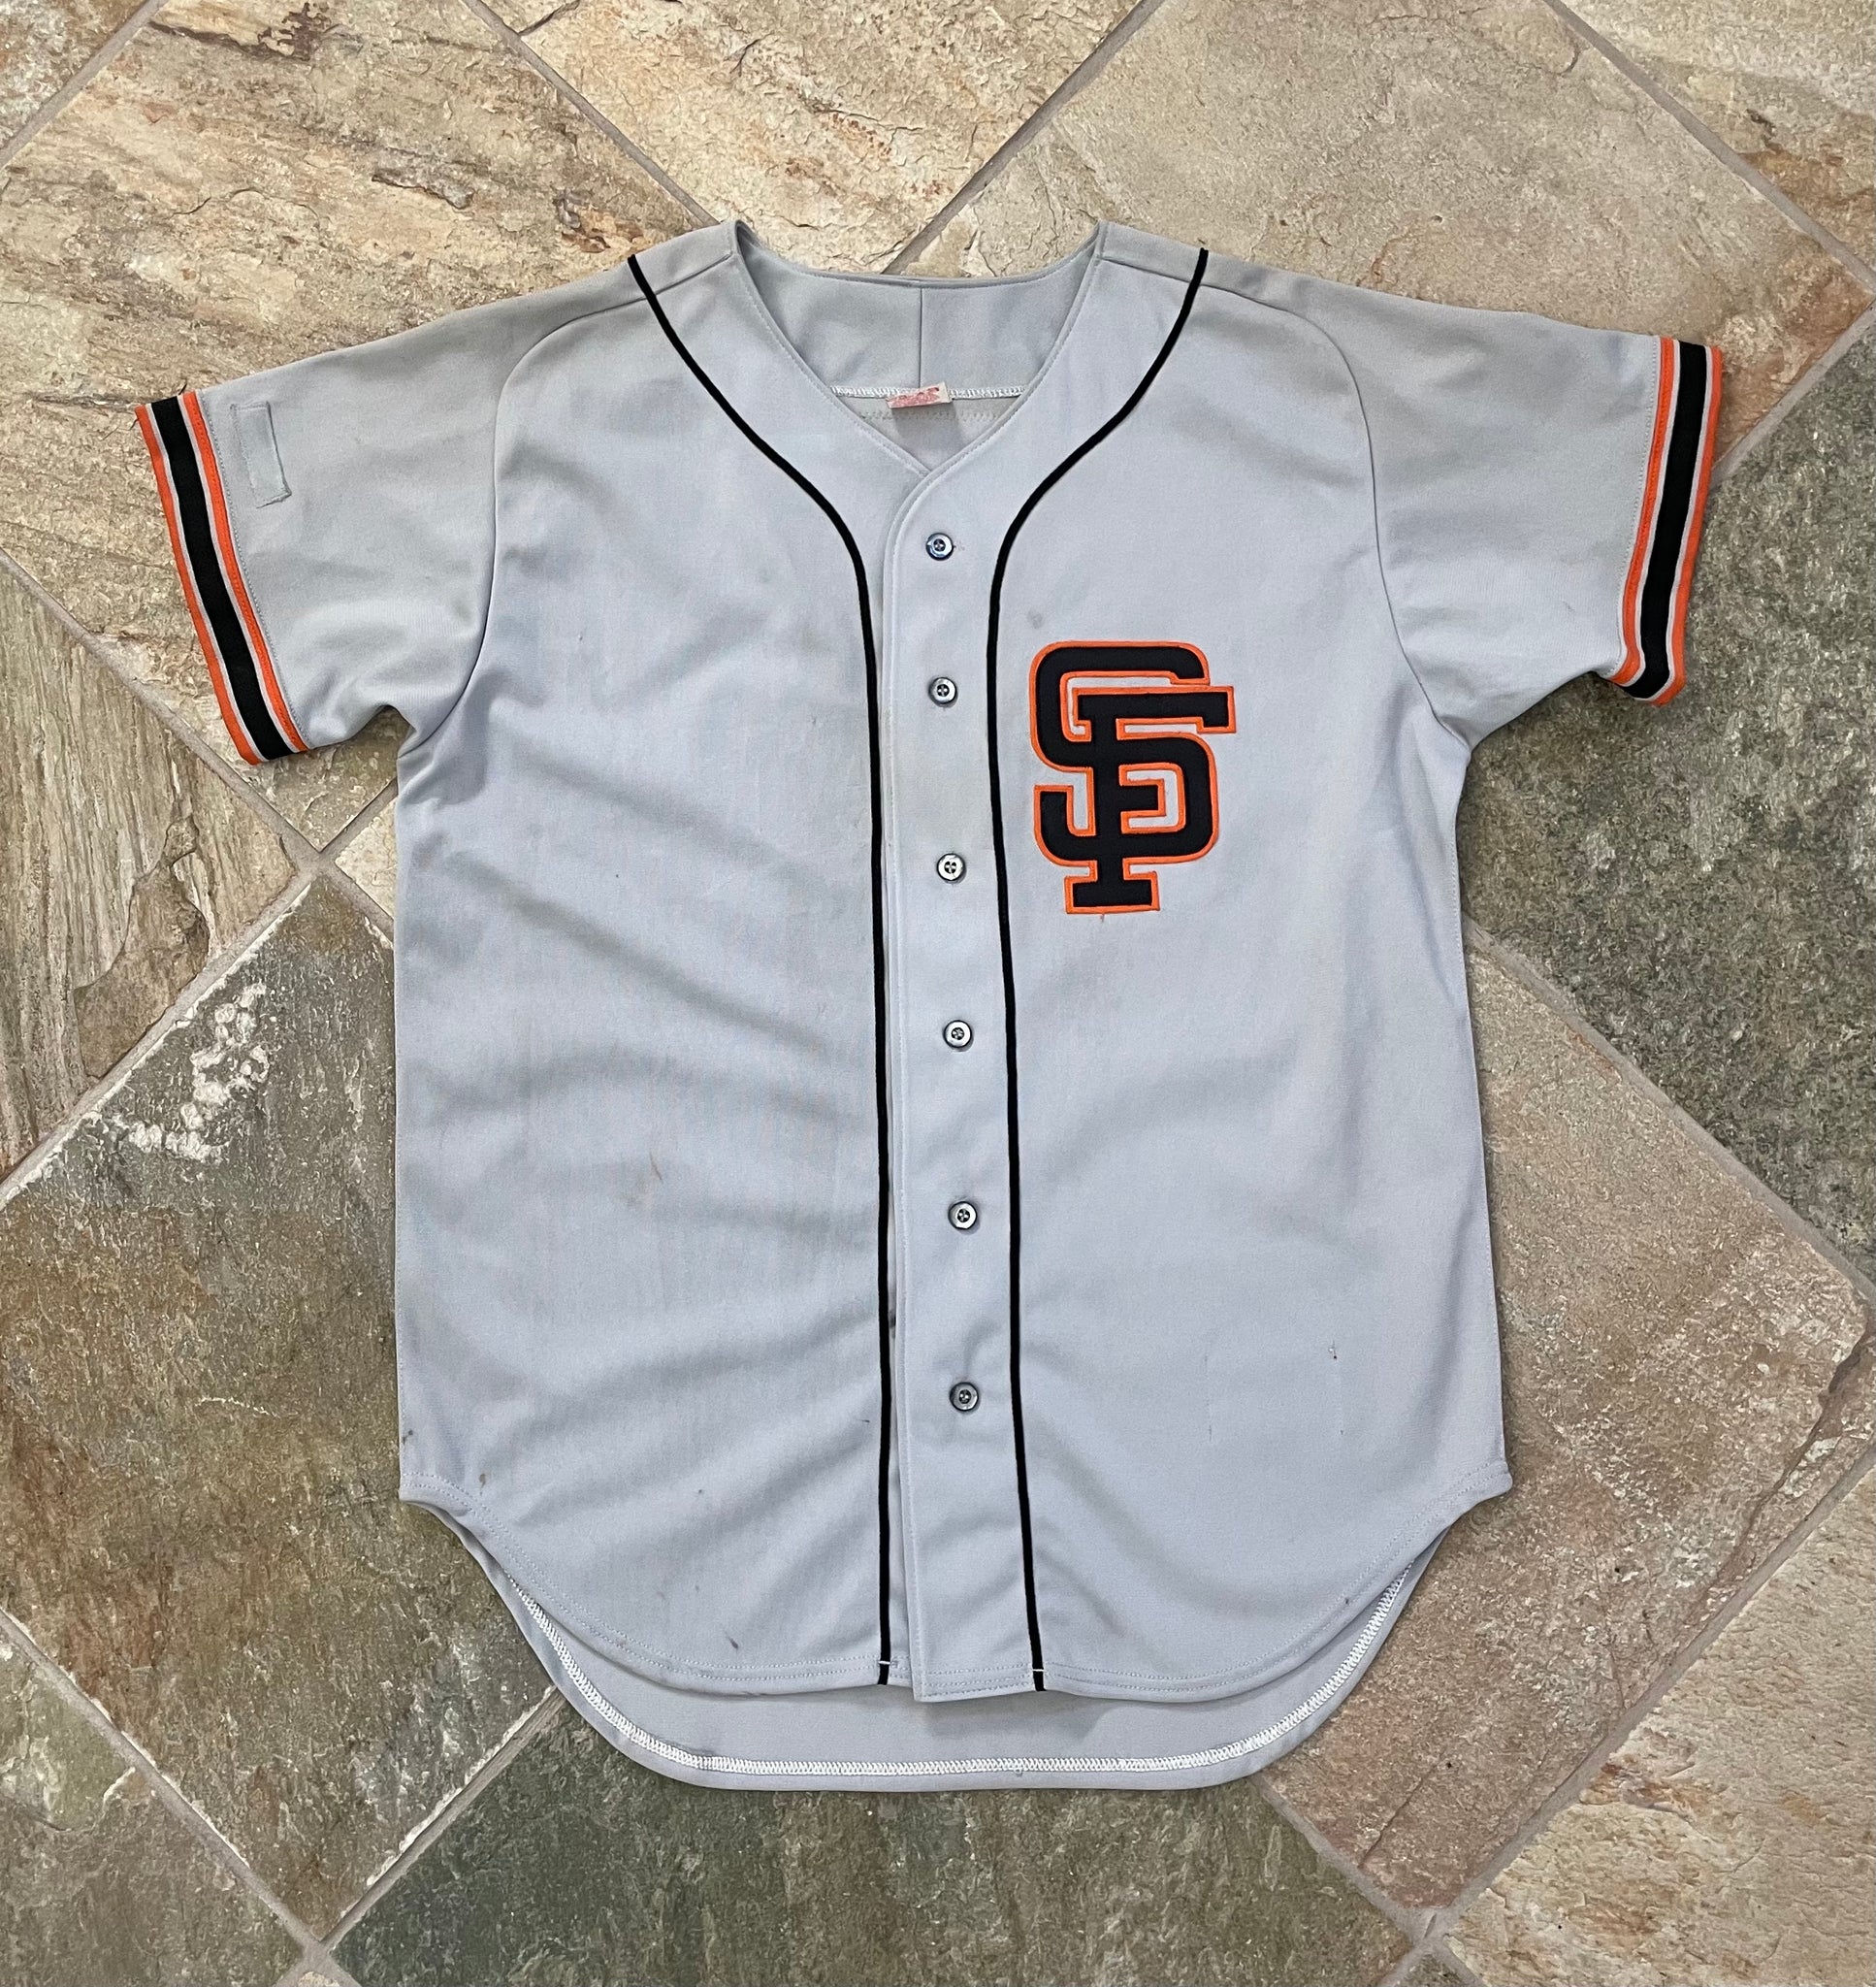 Vintage 80s San Francisco Giants Baseball Jersey by Rawlings Size 42 Sewn